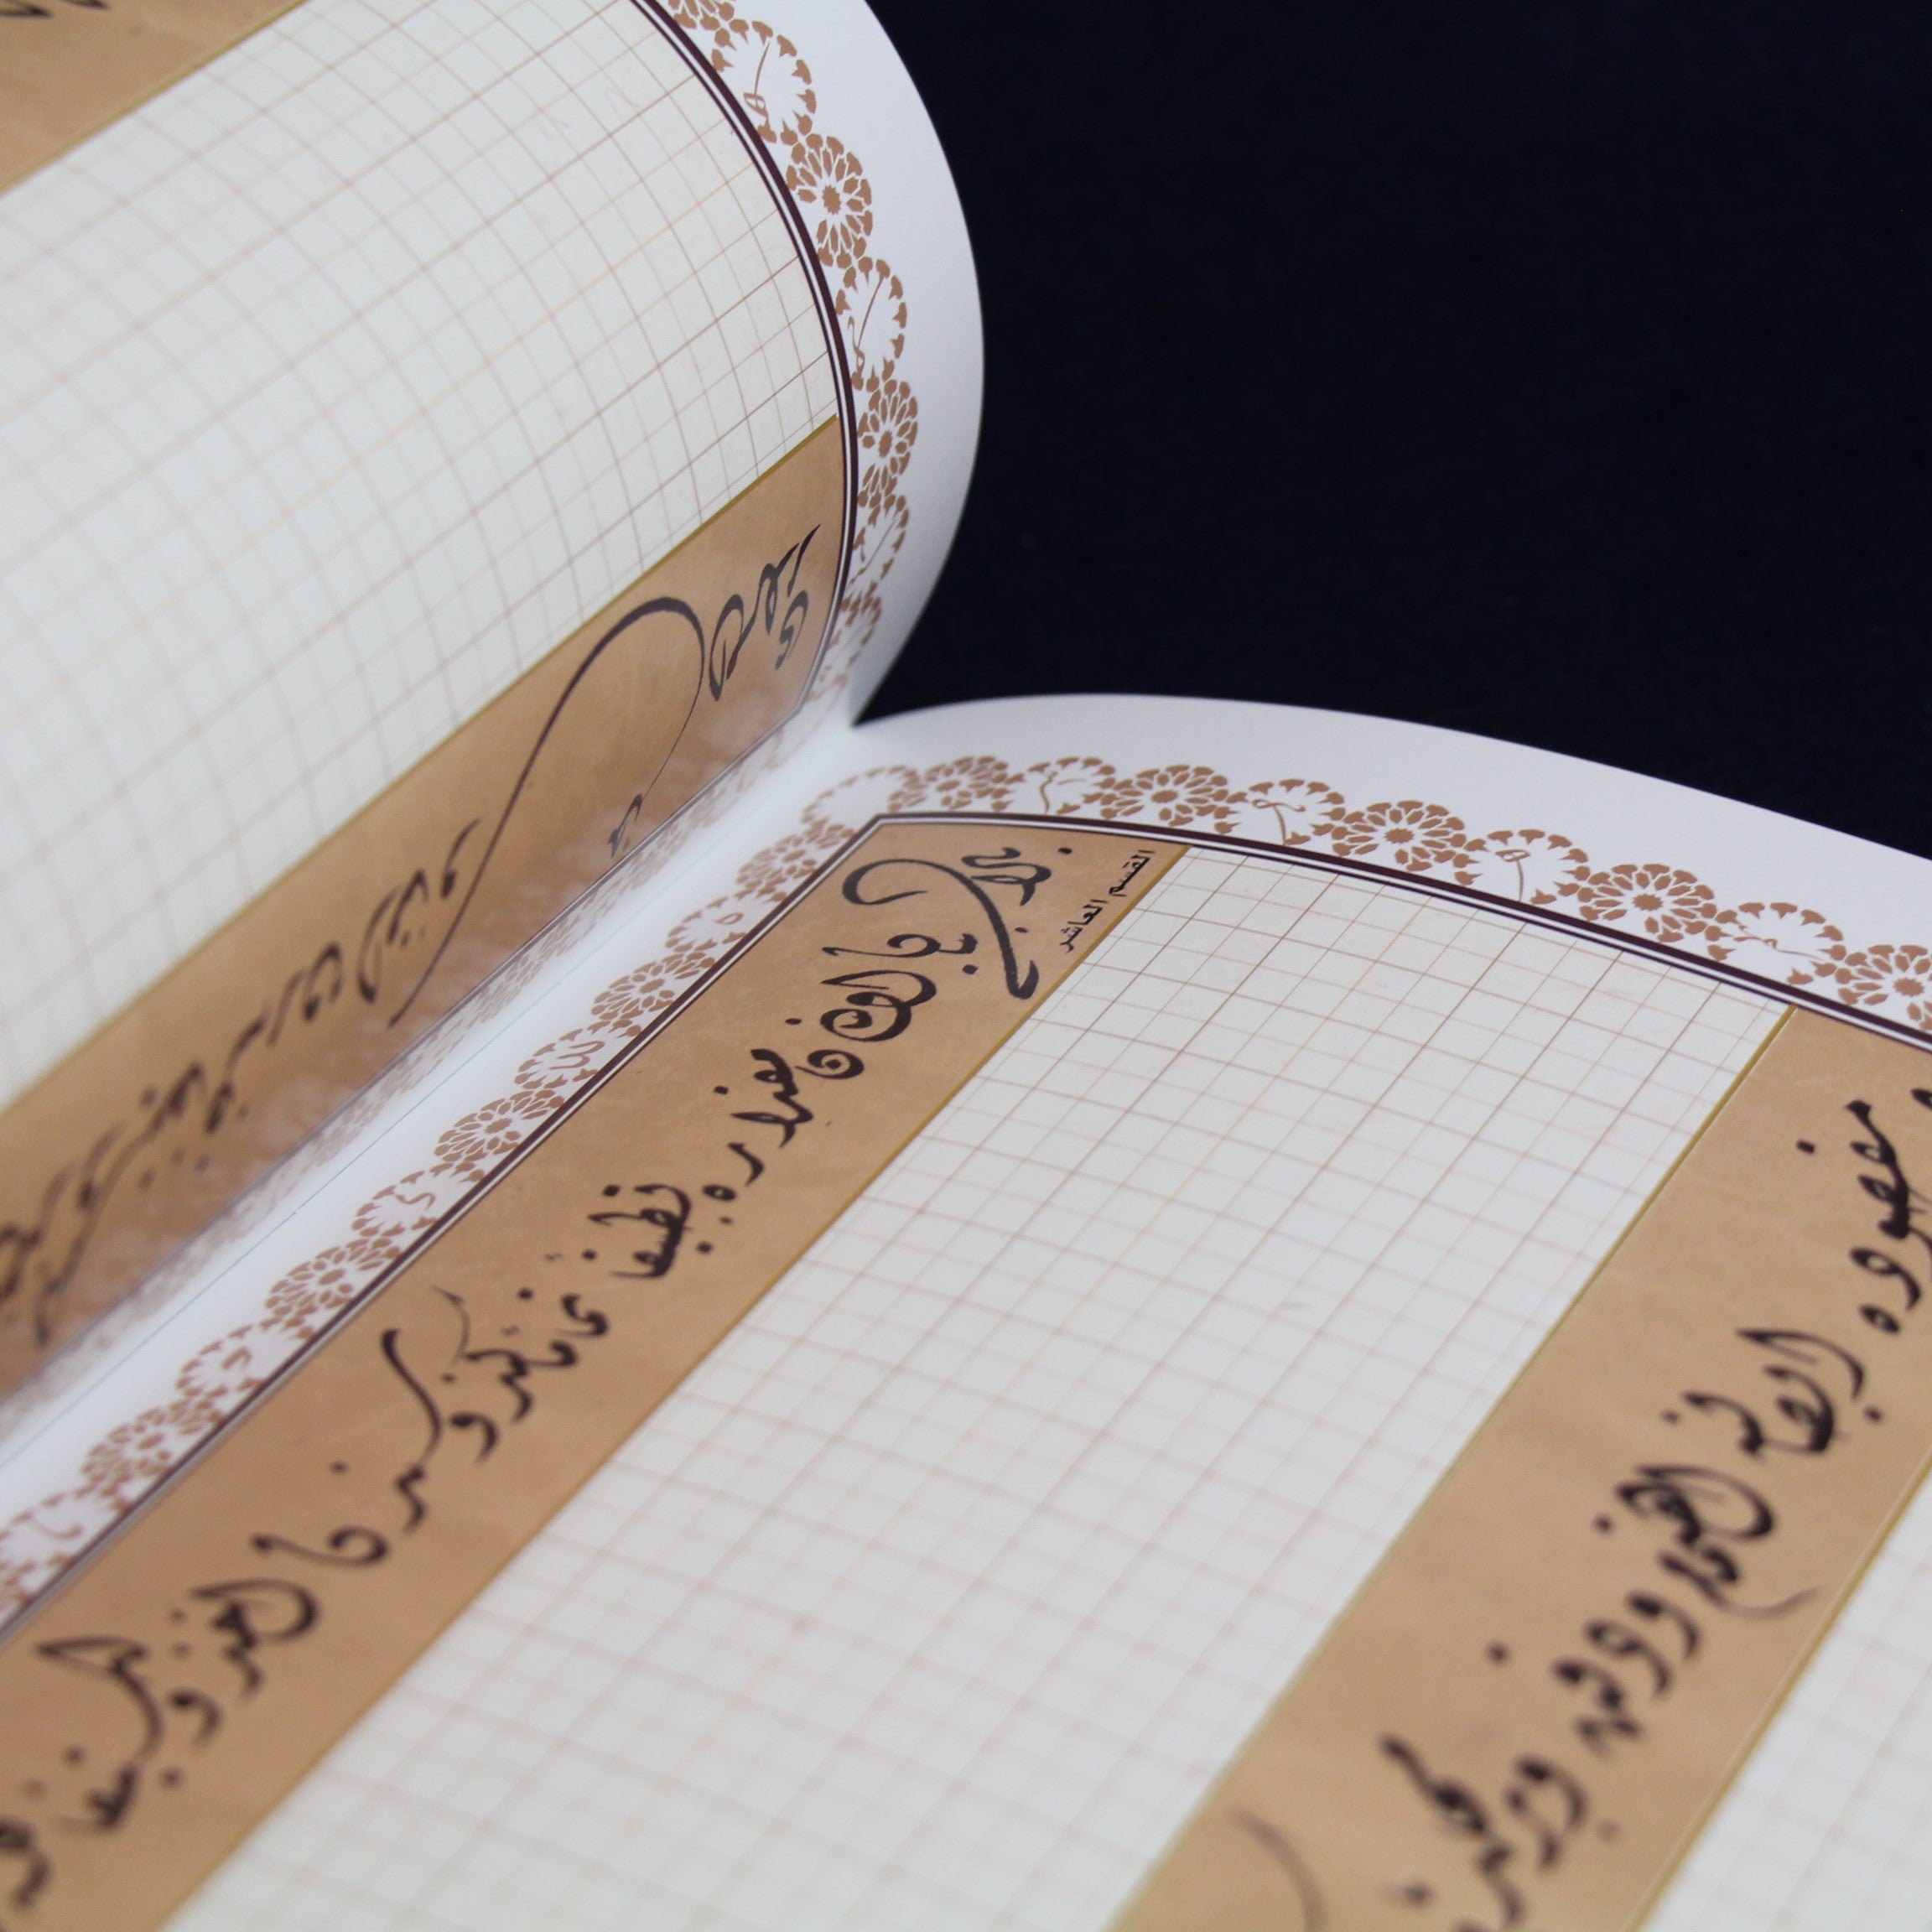 Arabic calligraphy workbook for Diwani - Mehmet Izzet Efendi